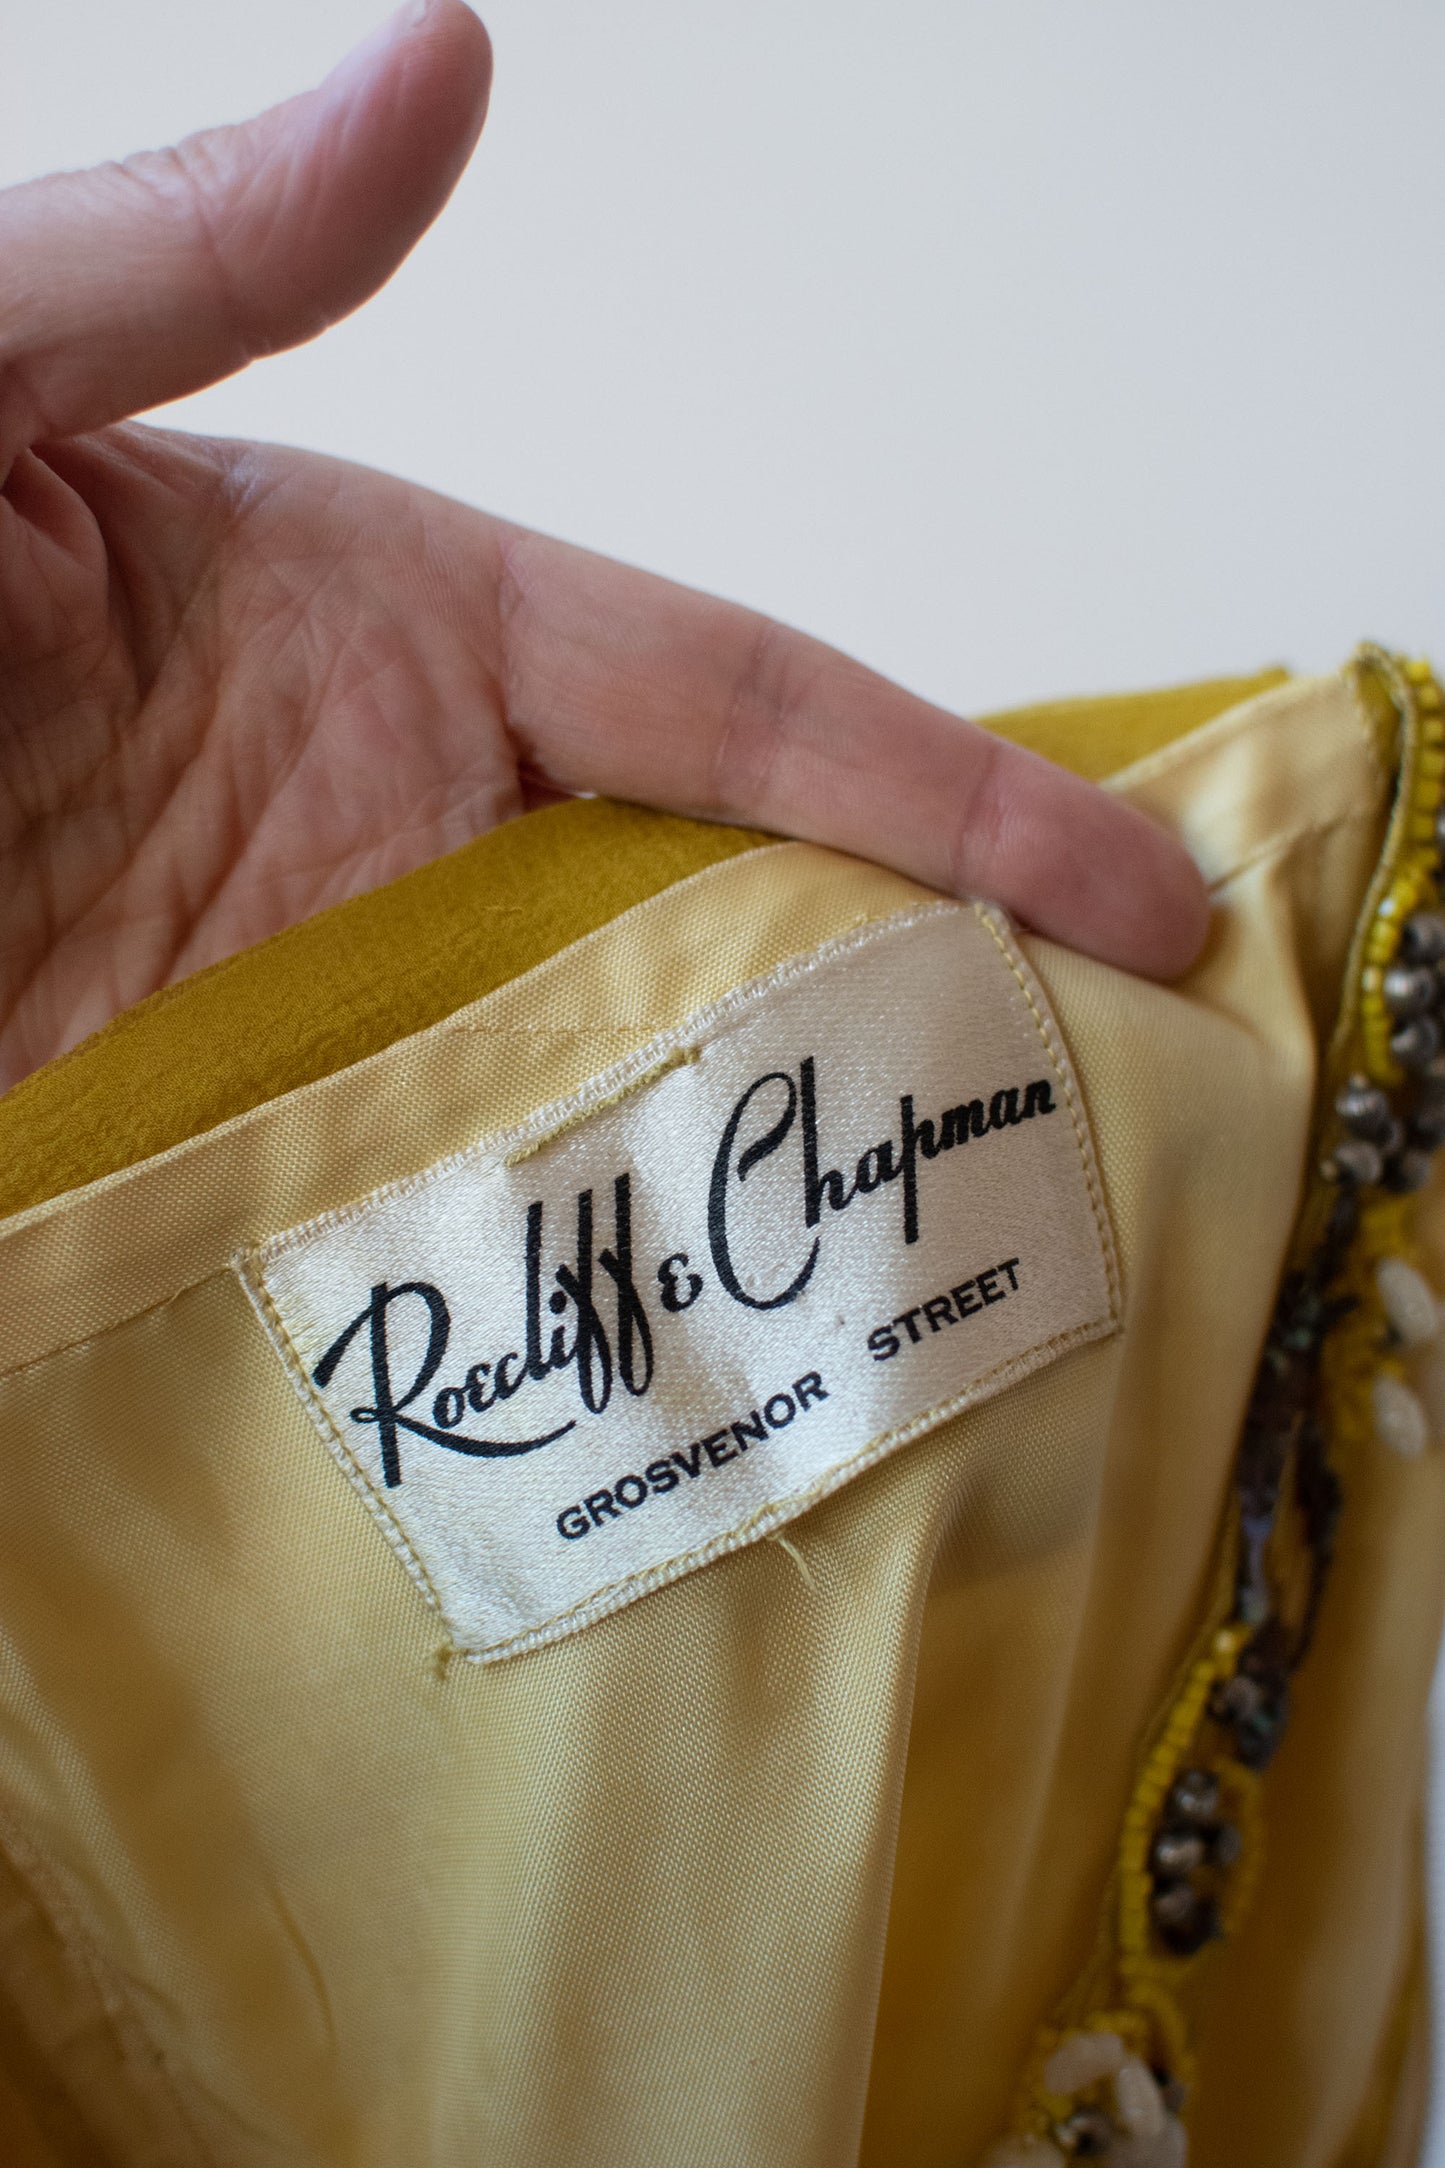 1940s Chartruse Chiffon Gown